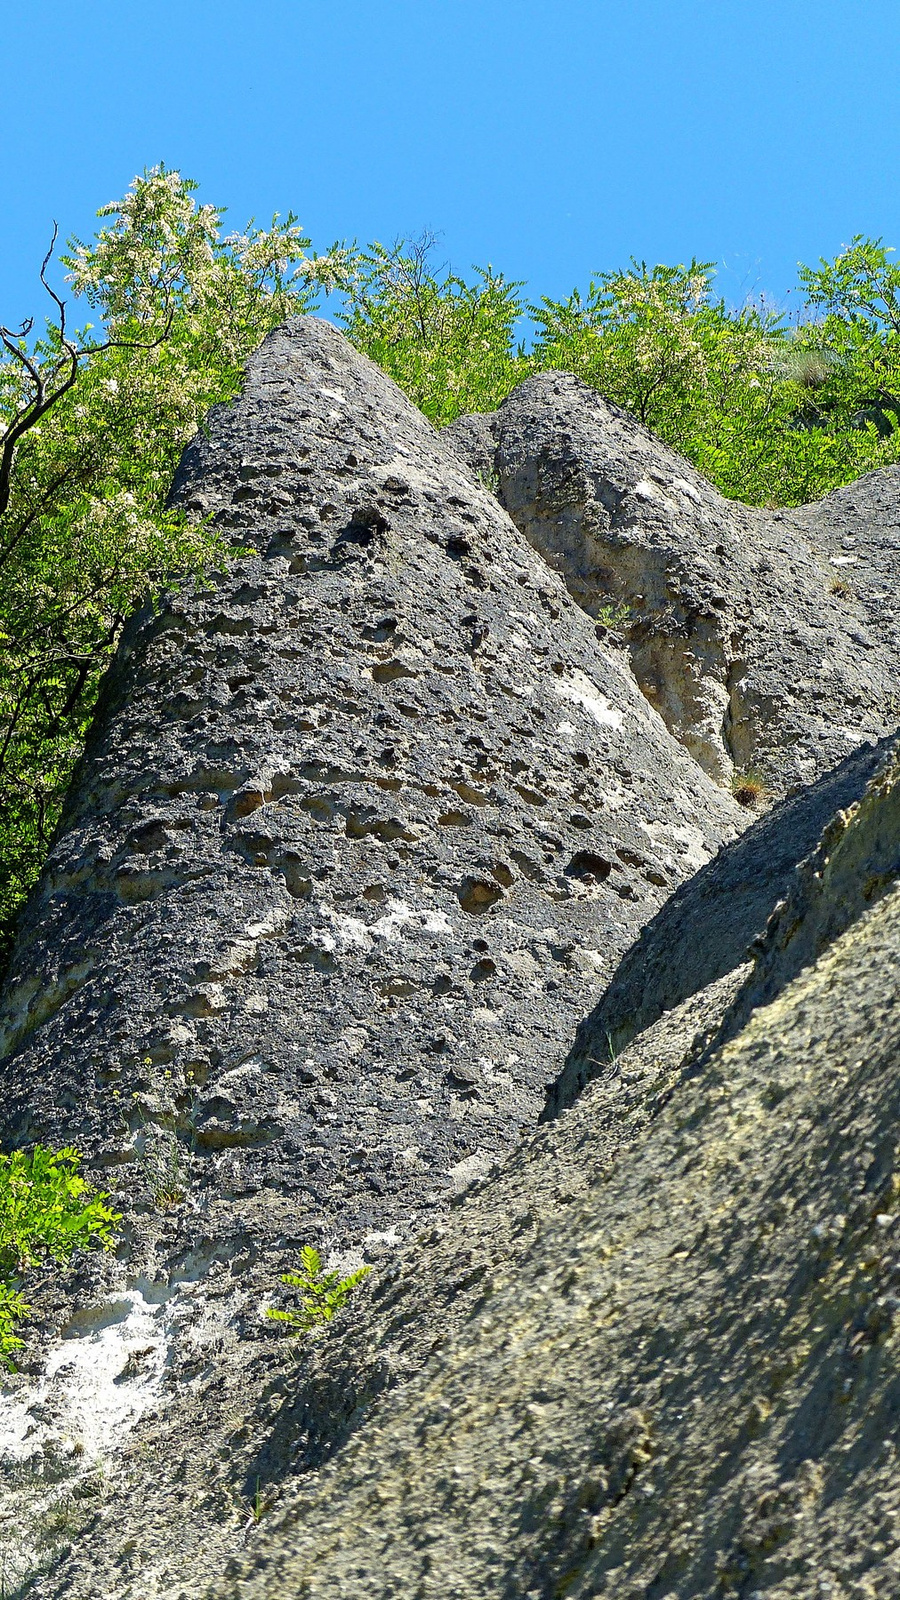 05 Kúp alakú szikla